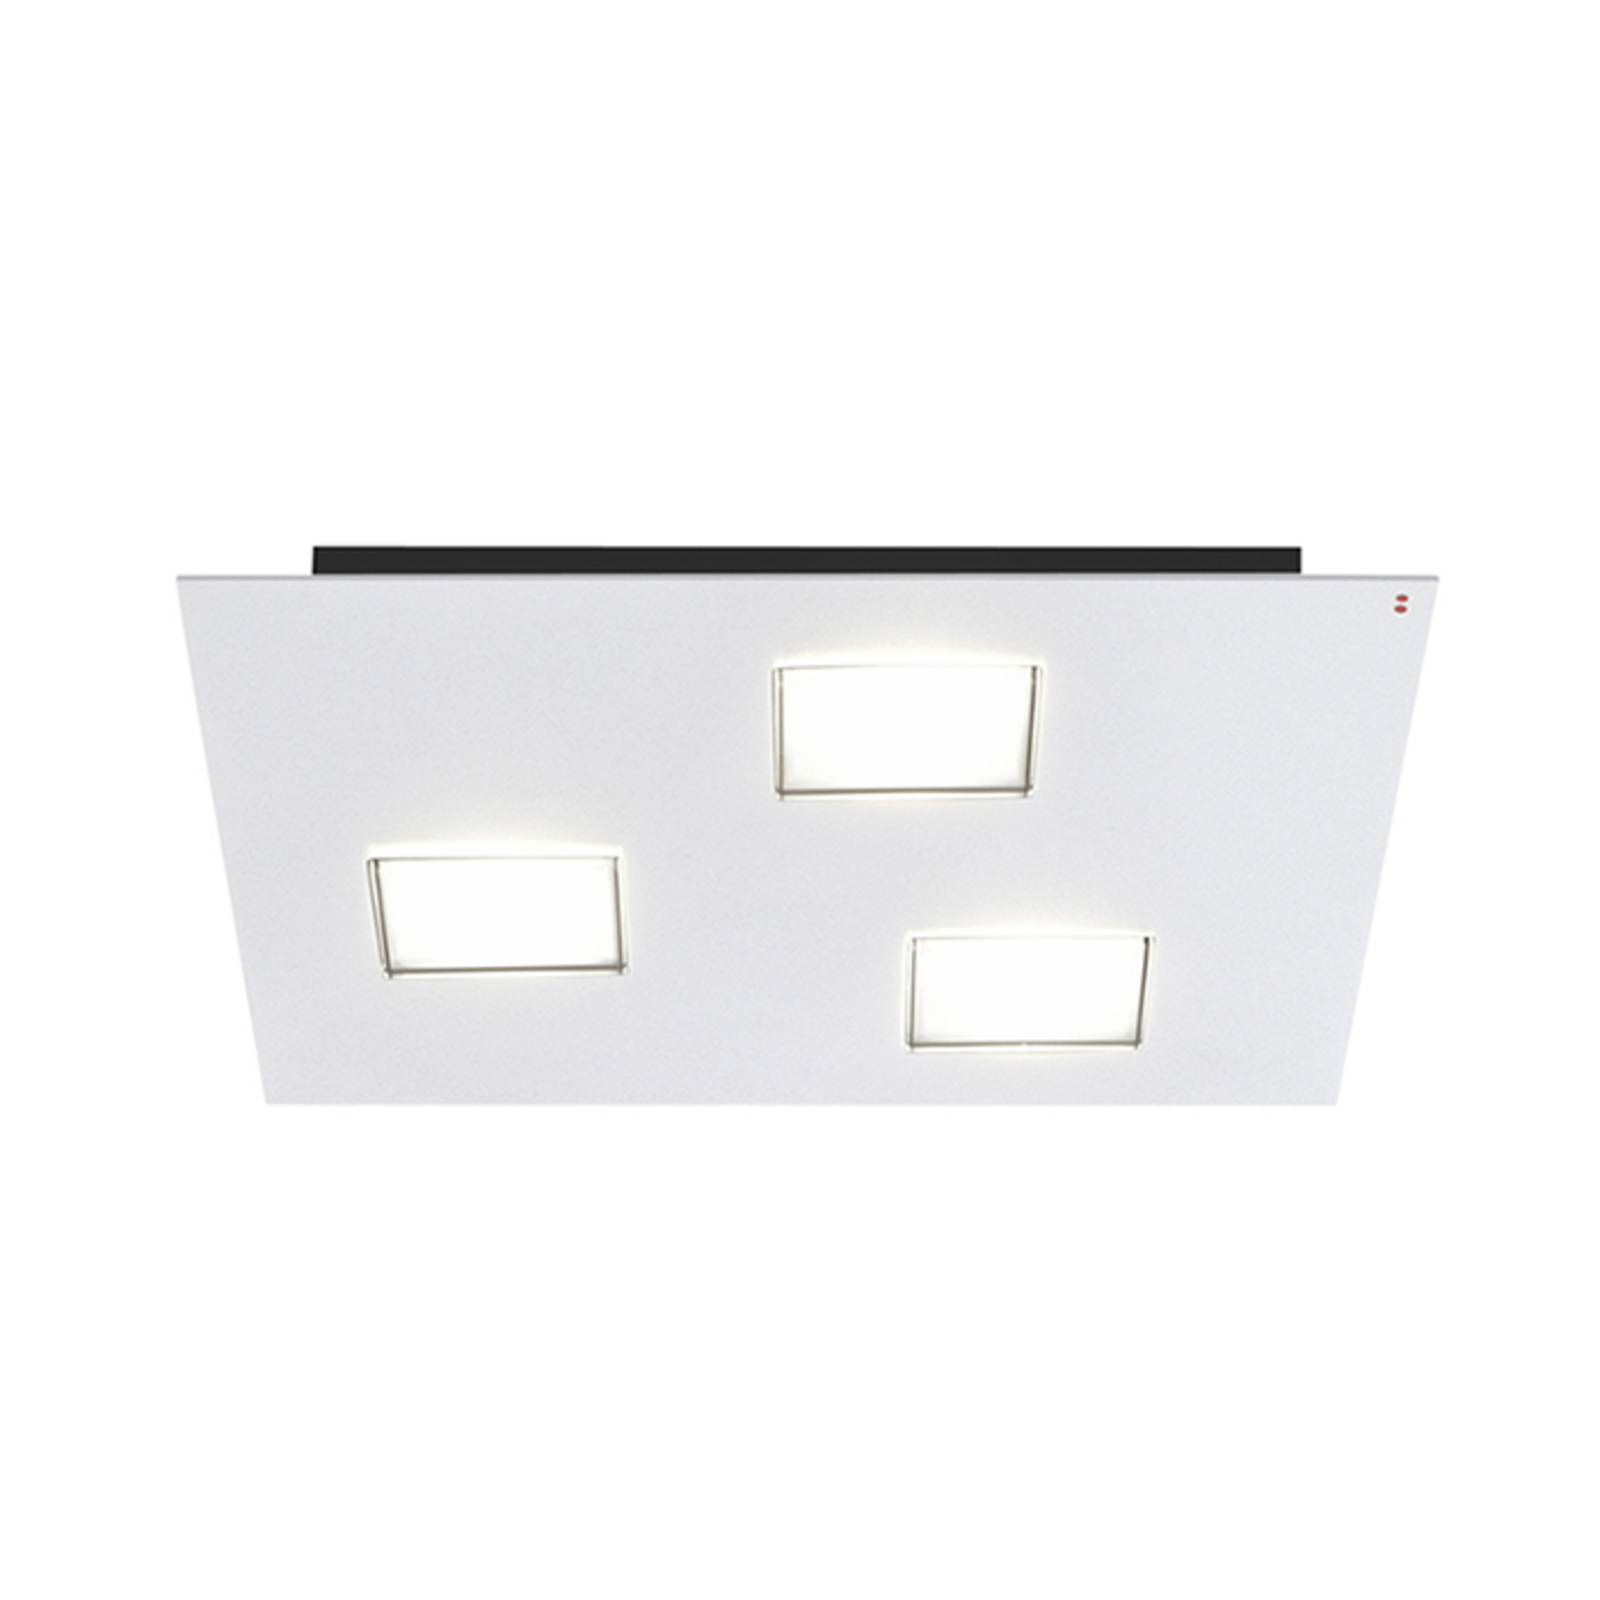 Quarter - LED plafondlamp in wit met 3 LED's